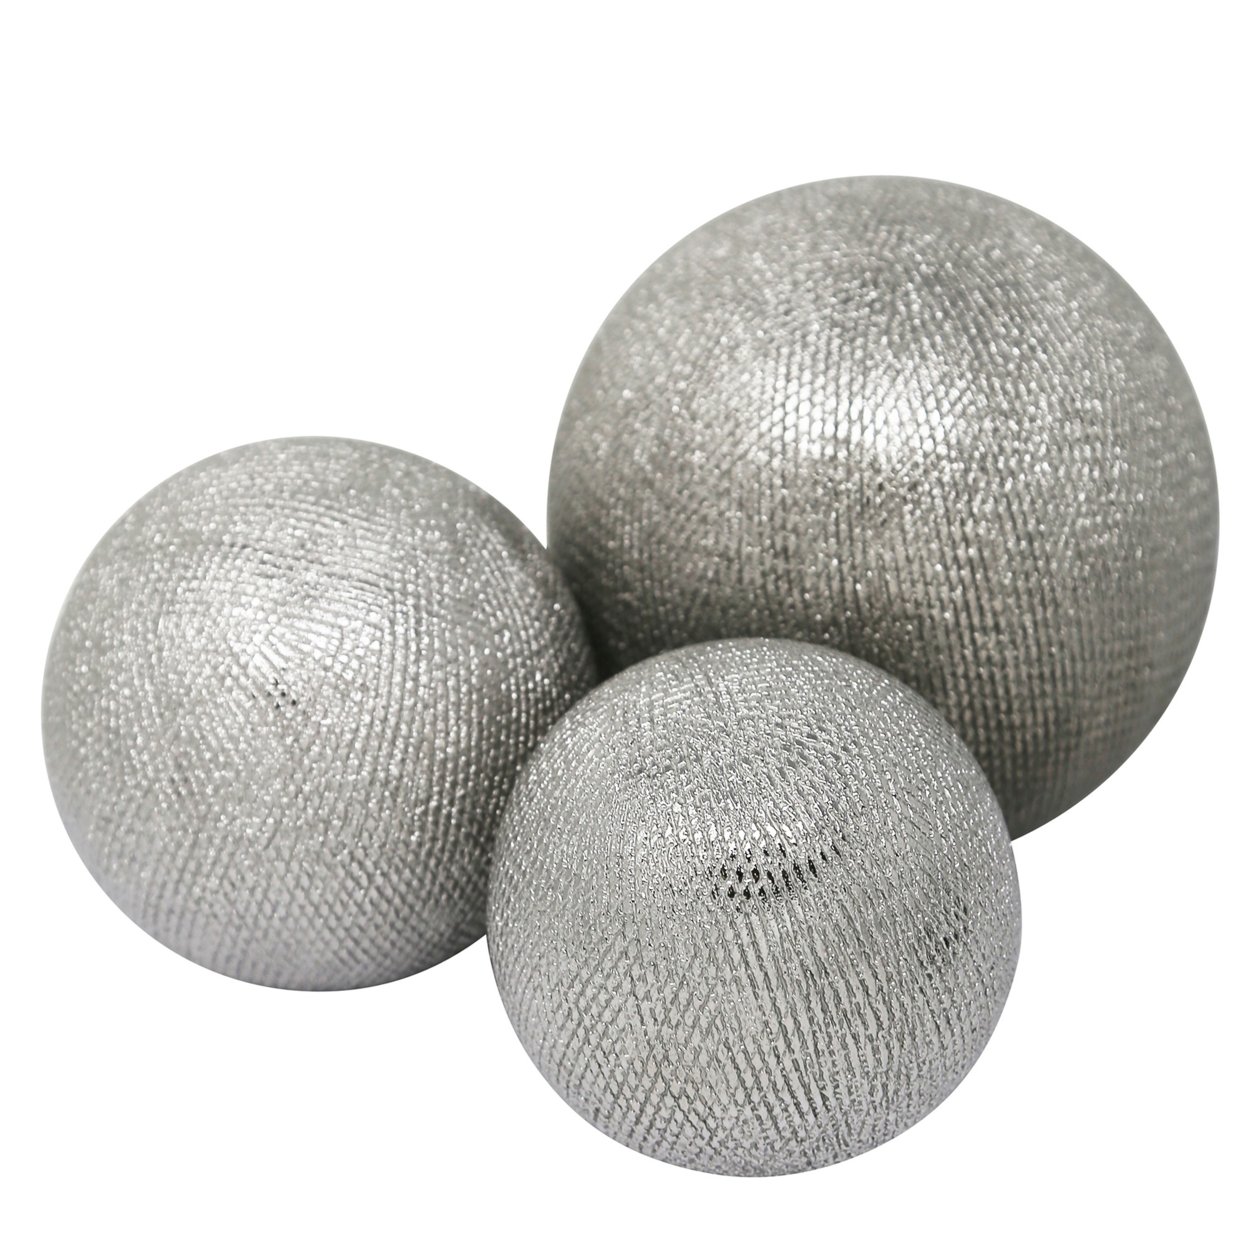 Decorative Ceramic Orbs With Textured Design, Silver, Set Of Three- Saltoro Sherpi